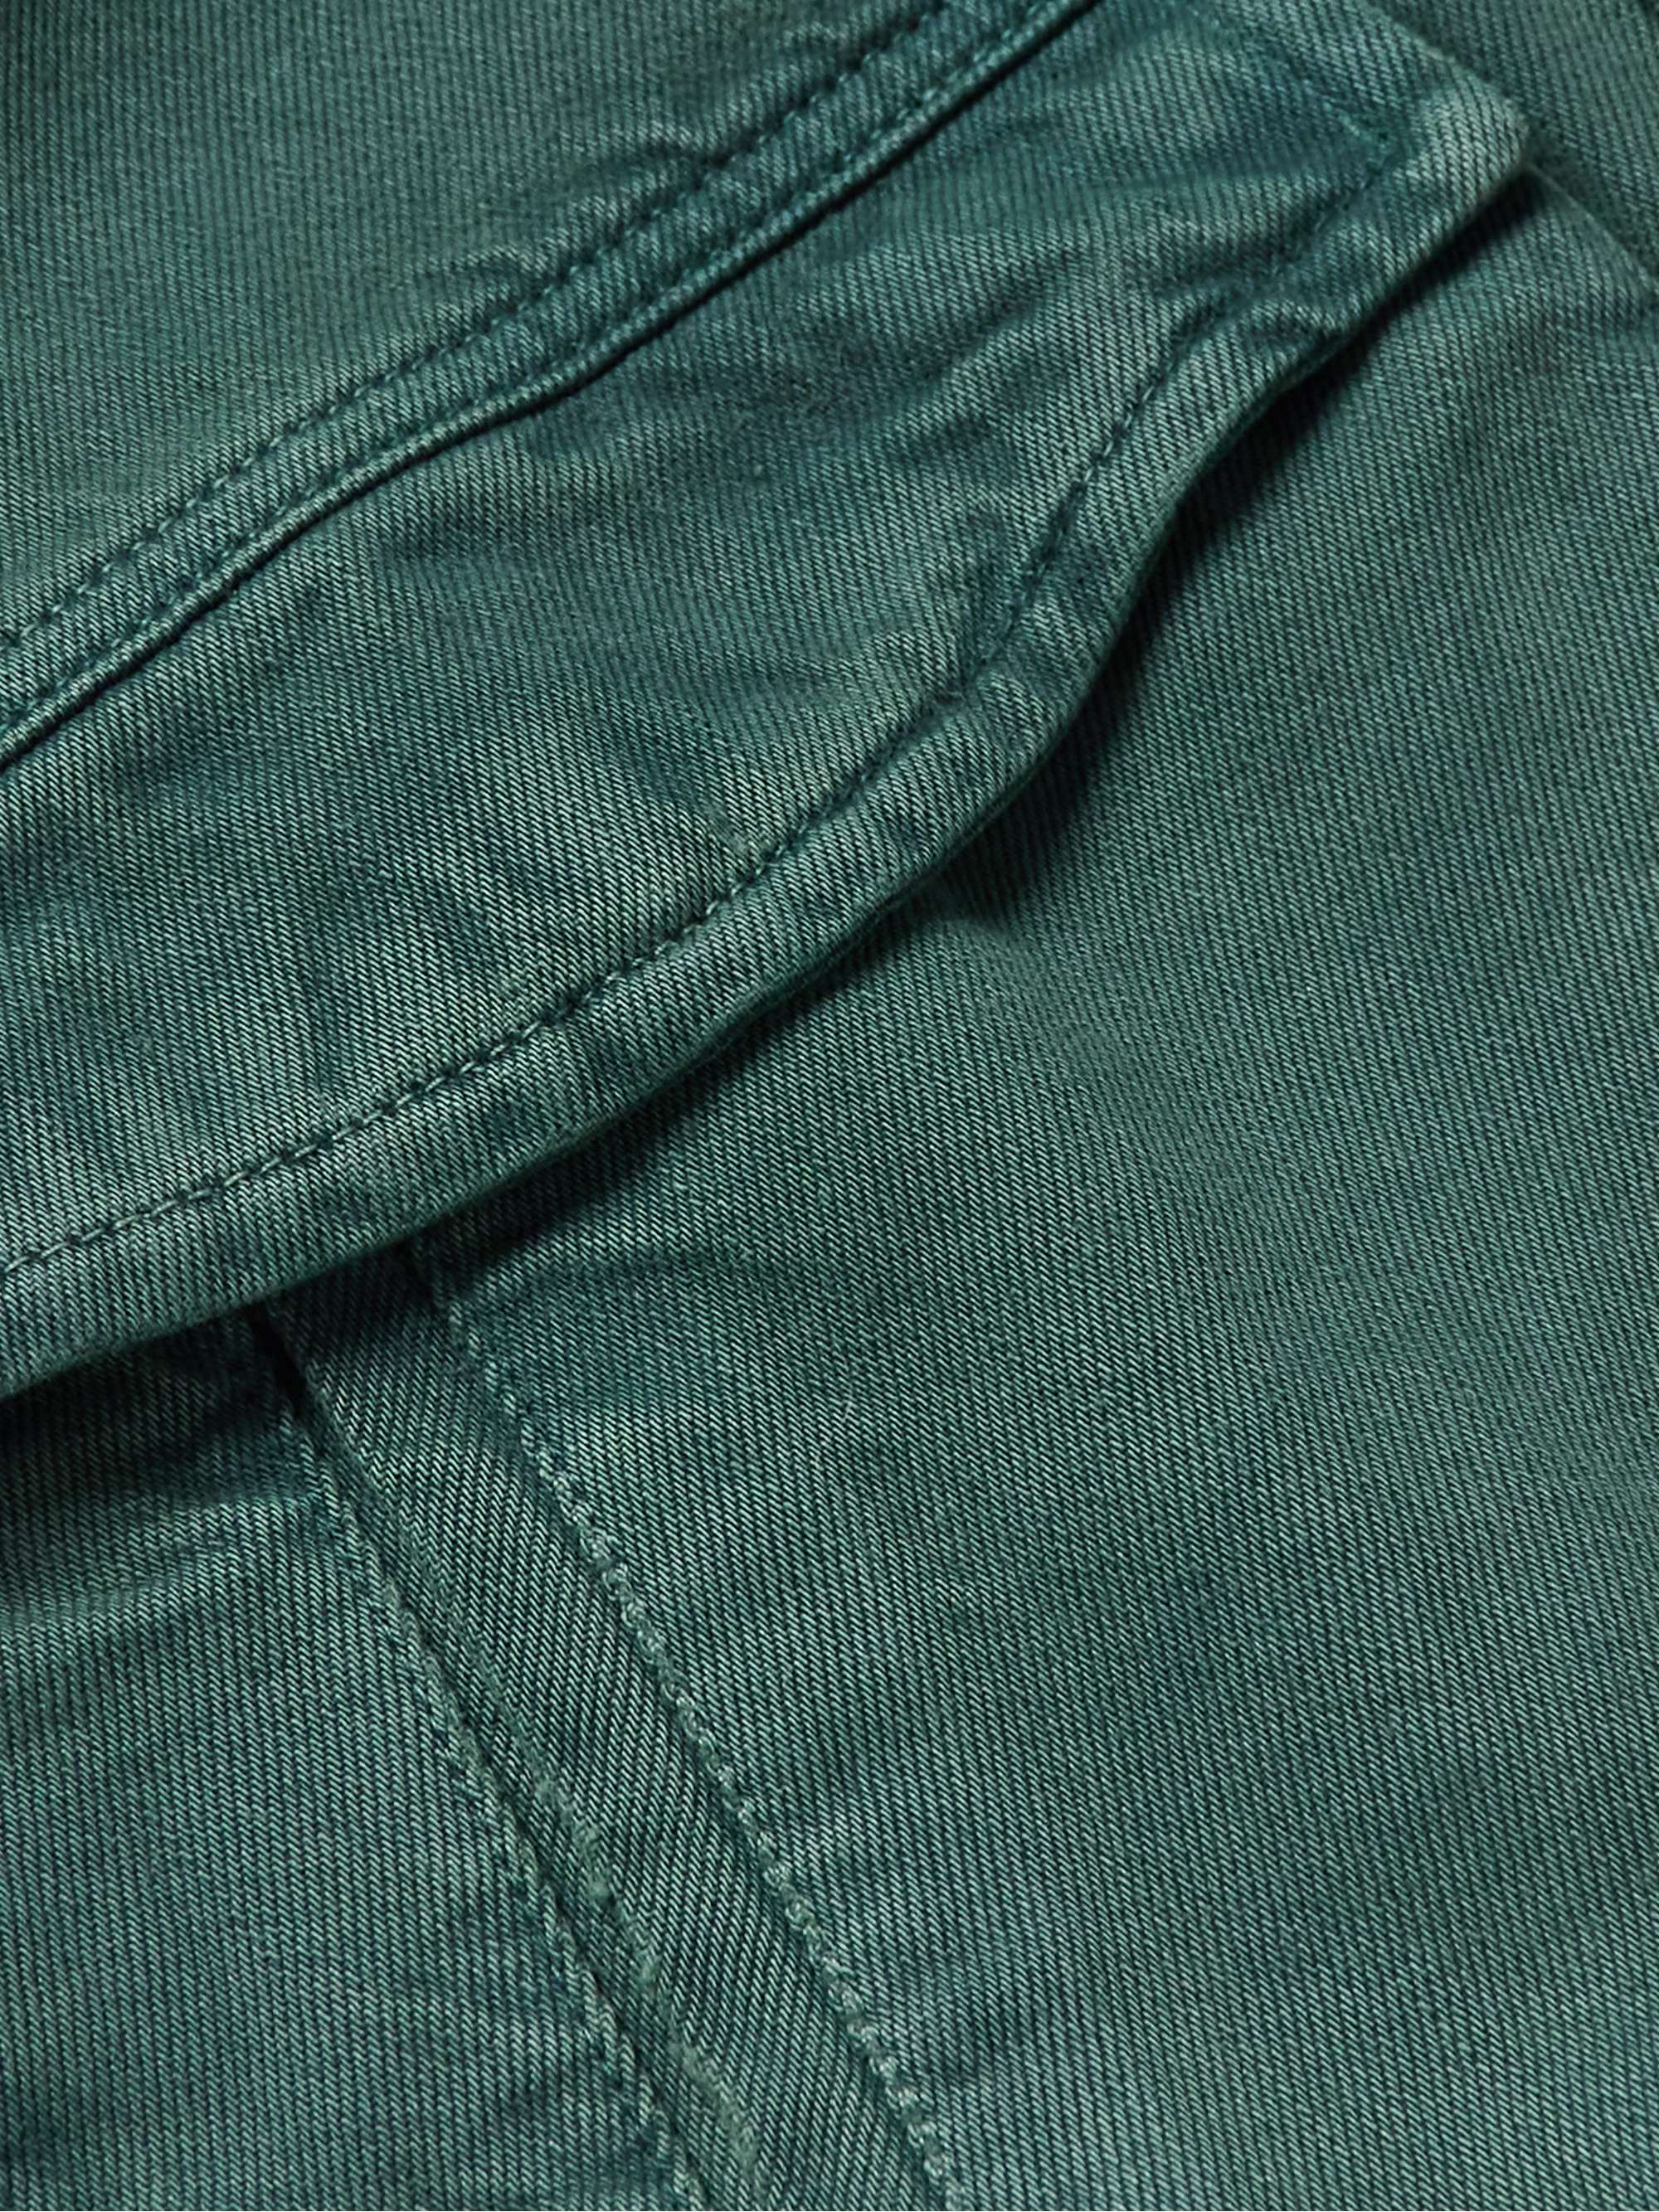 MANAAKI Taika Cotton-Twill Chore Jacket